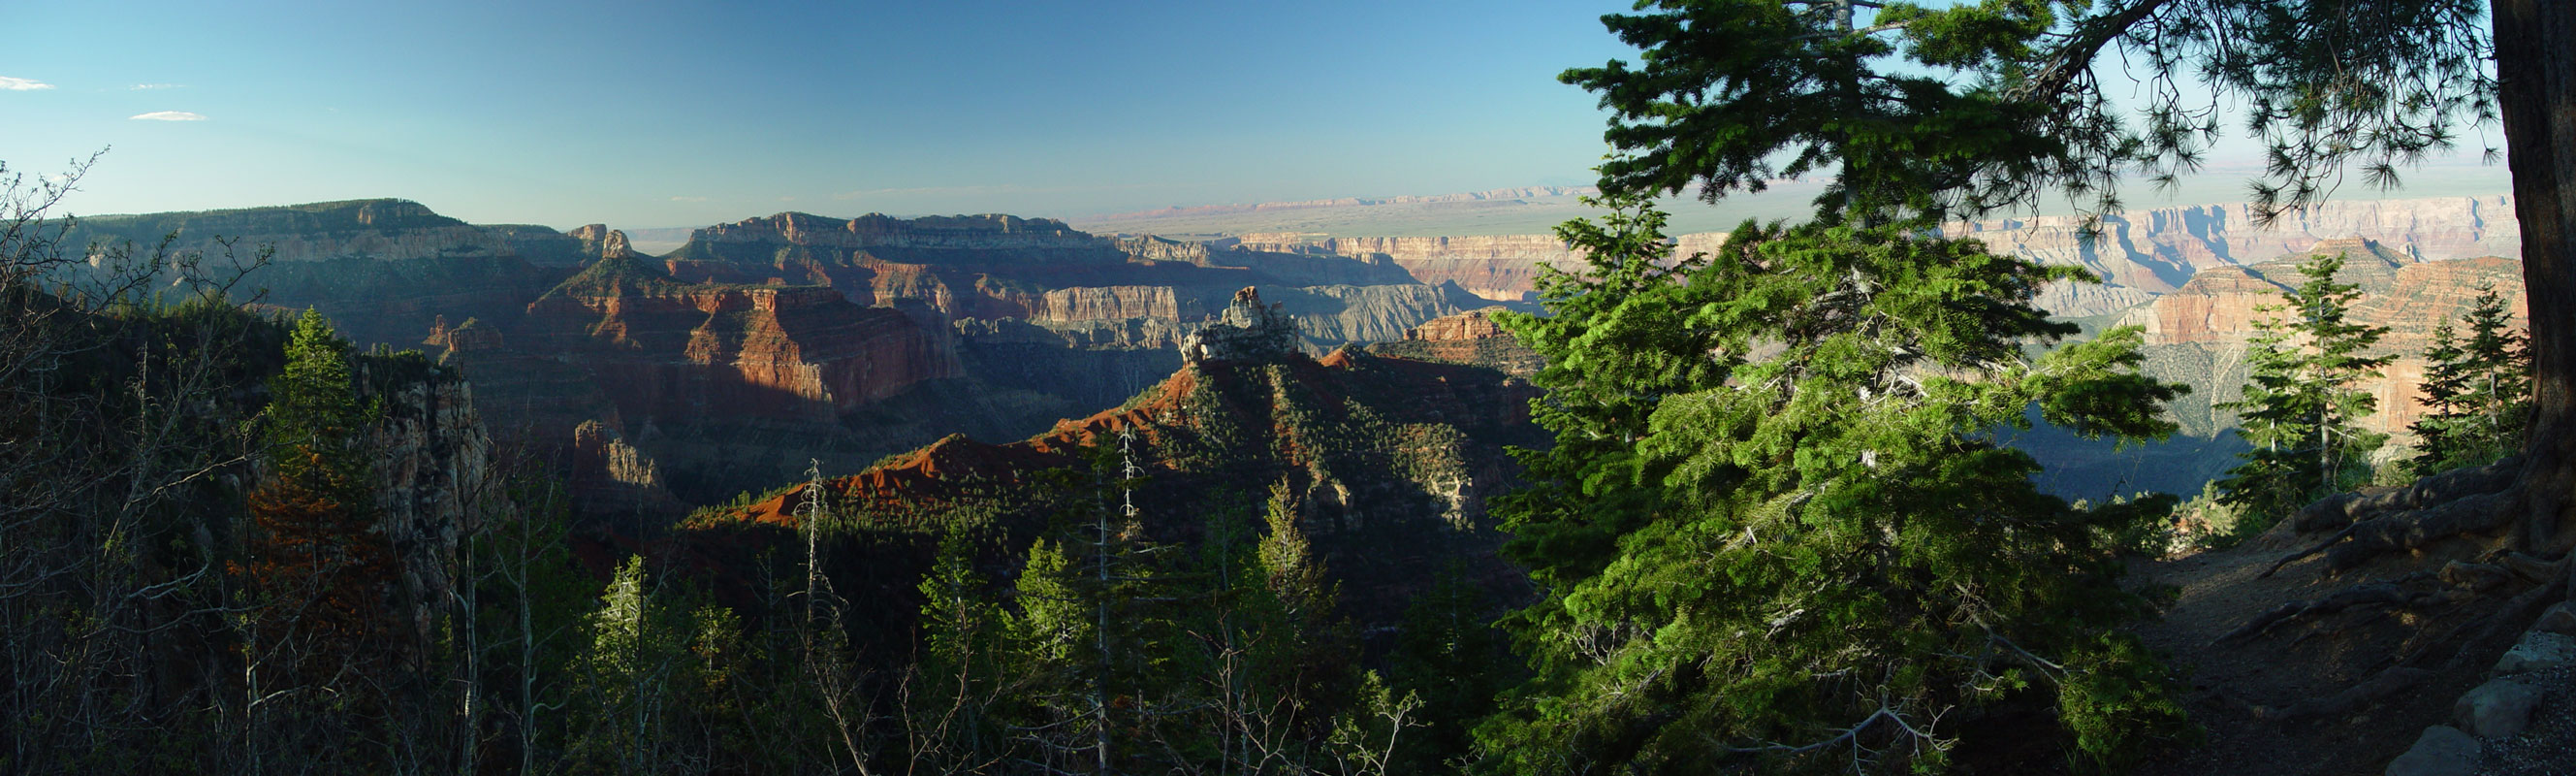 Vista Encantada Grand Canyon north rim